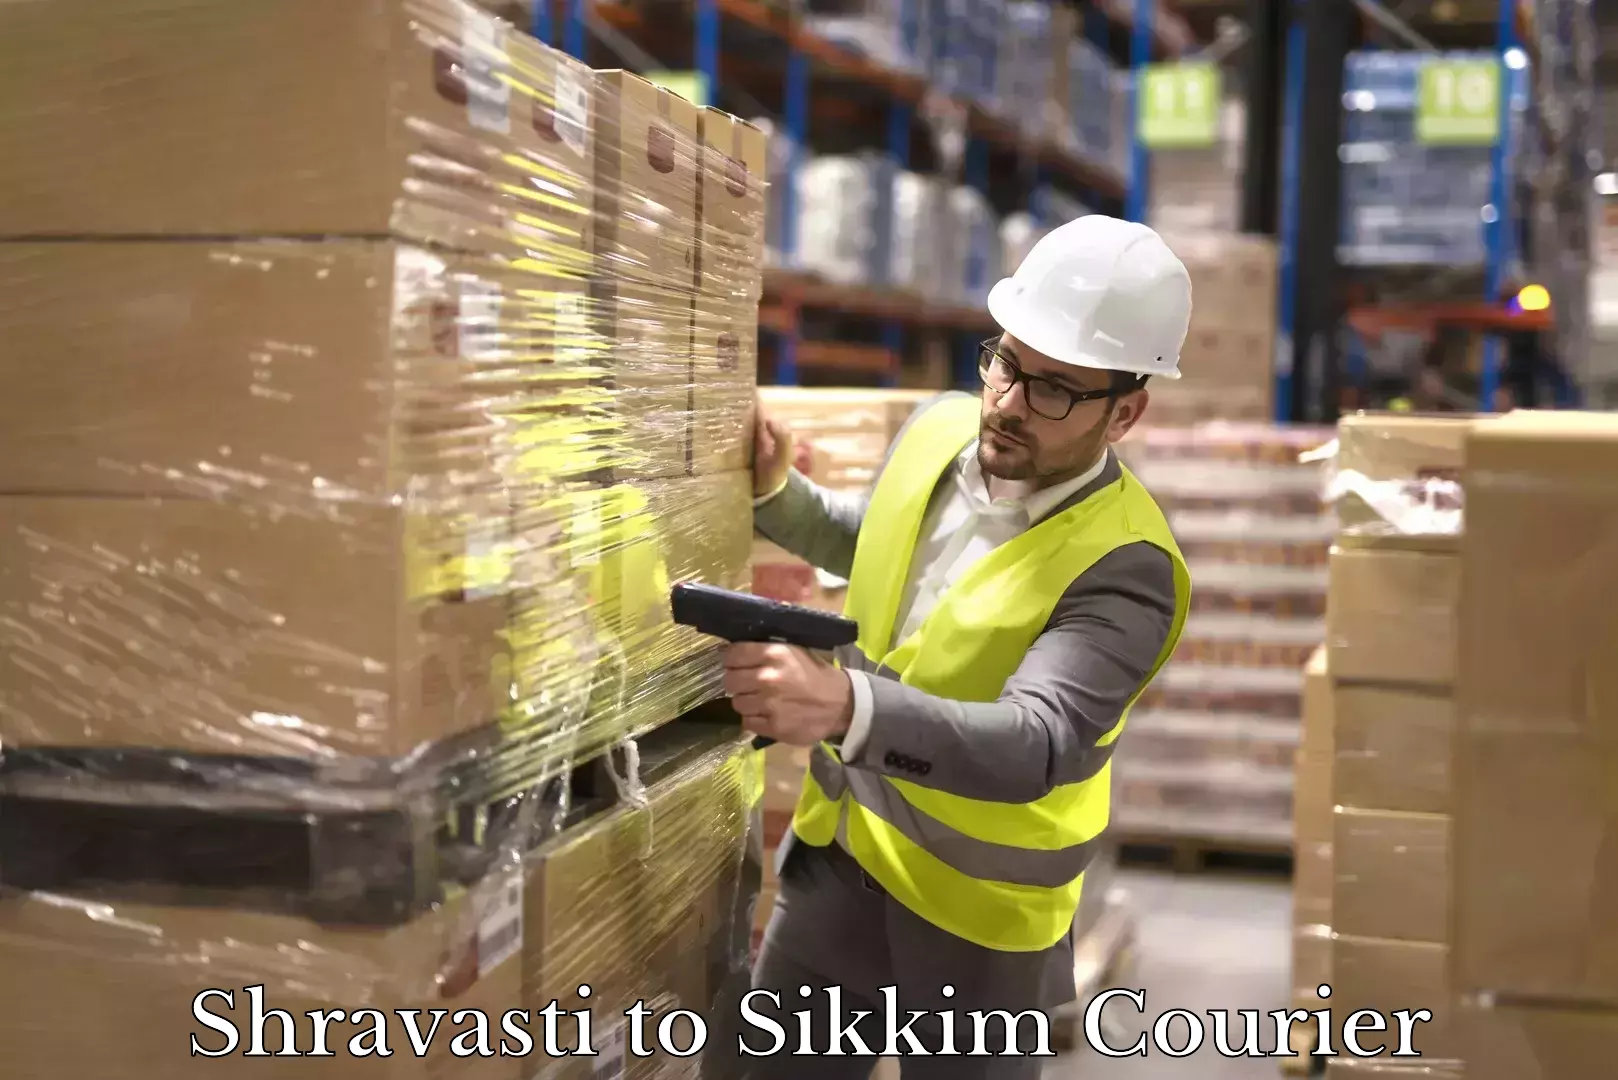 Delivery service partnership Shravasti to Sikkim